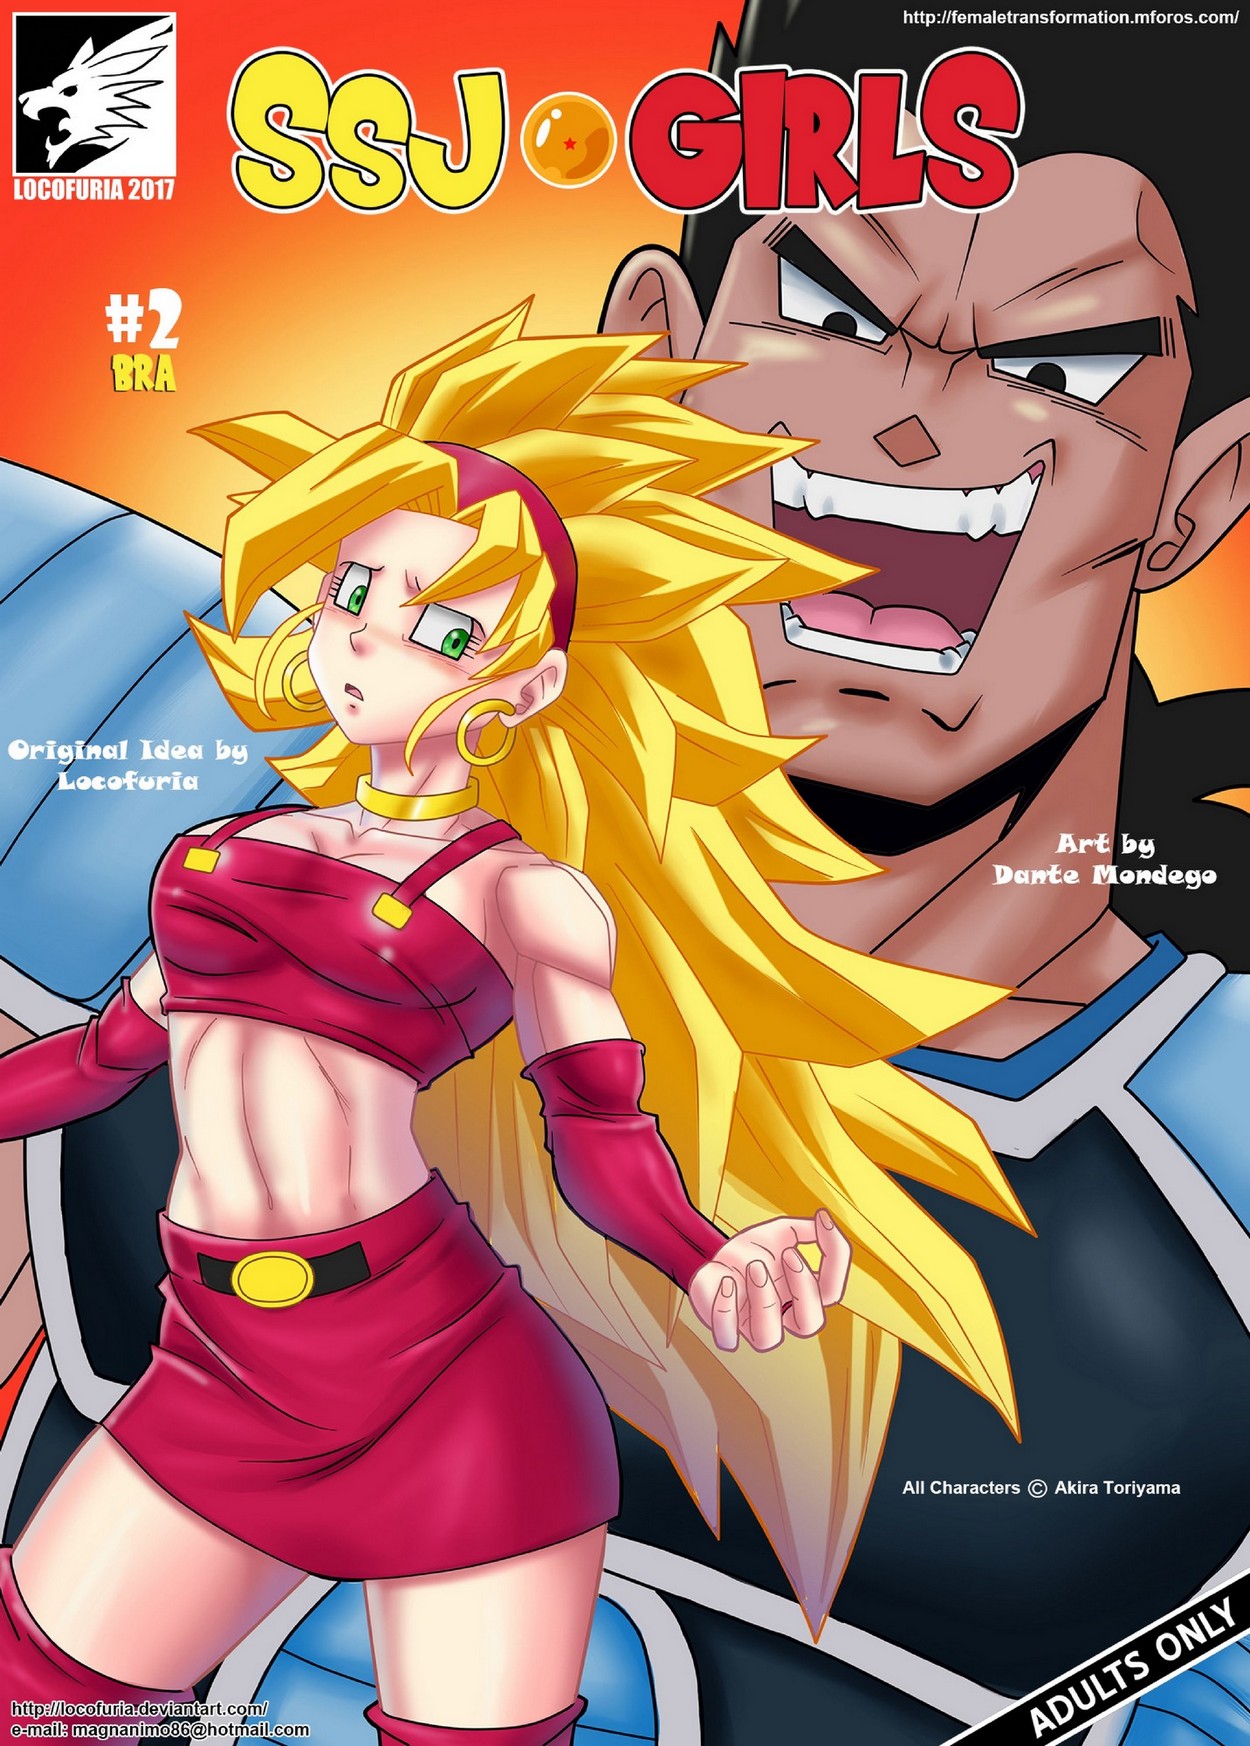 Dragon Ball Ssj Girls 2 Bra [locofuria] Revistasequadrinhos Free Online Hq Hentai